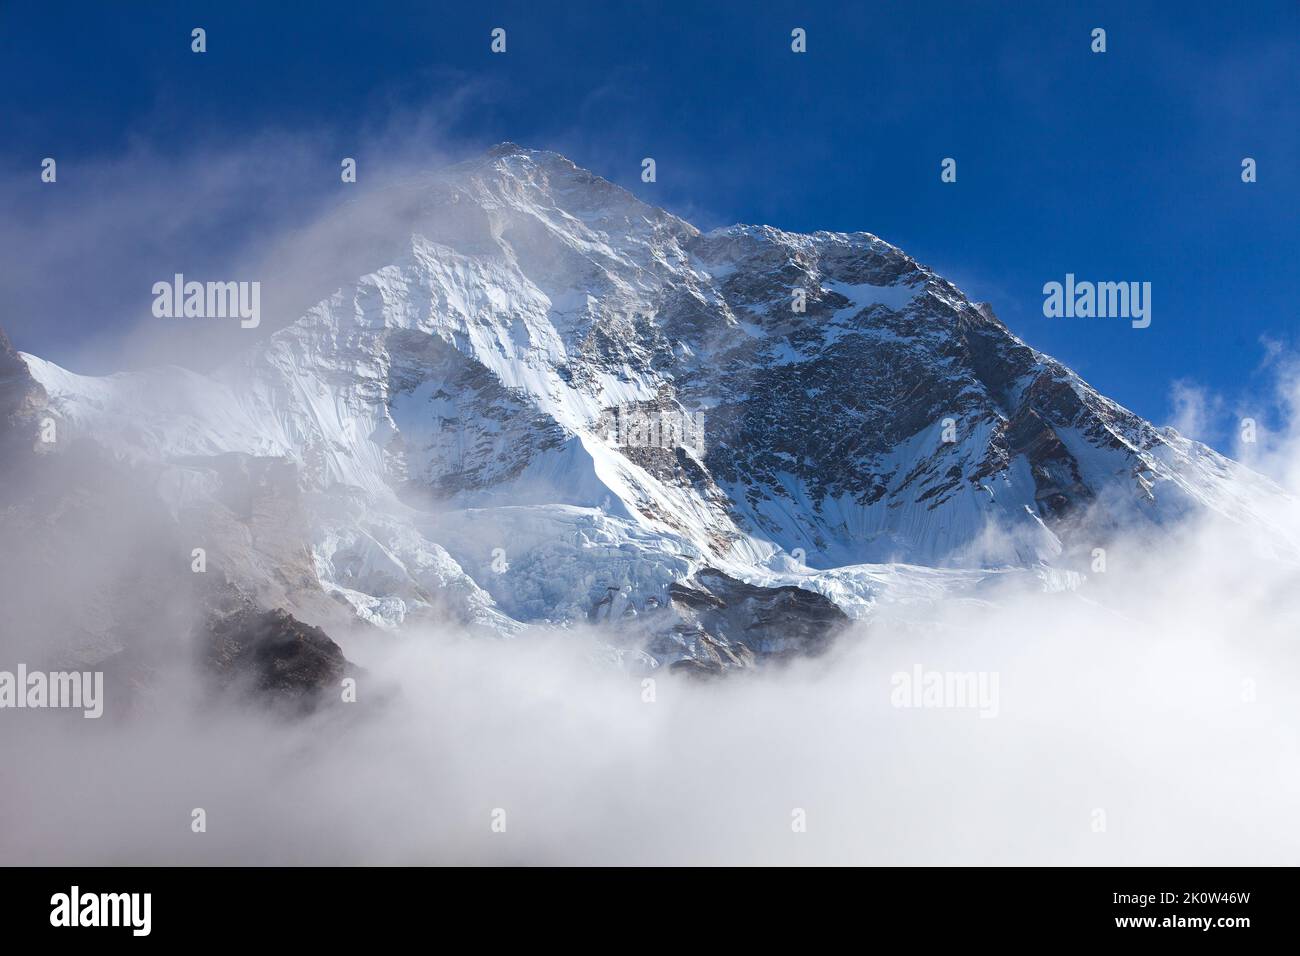 Mount Makalu with clouds, Nepal Himalayas mountains, Barun valley Stock Photo